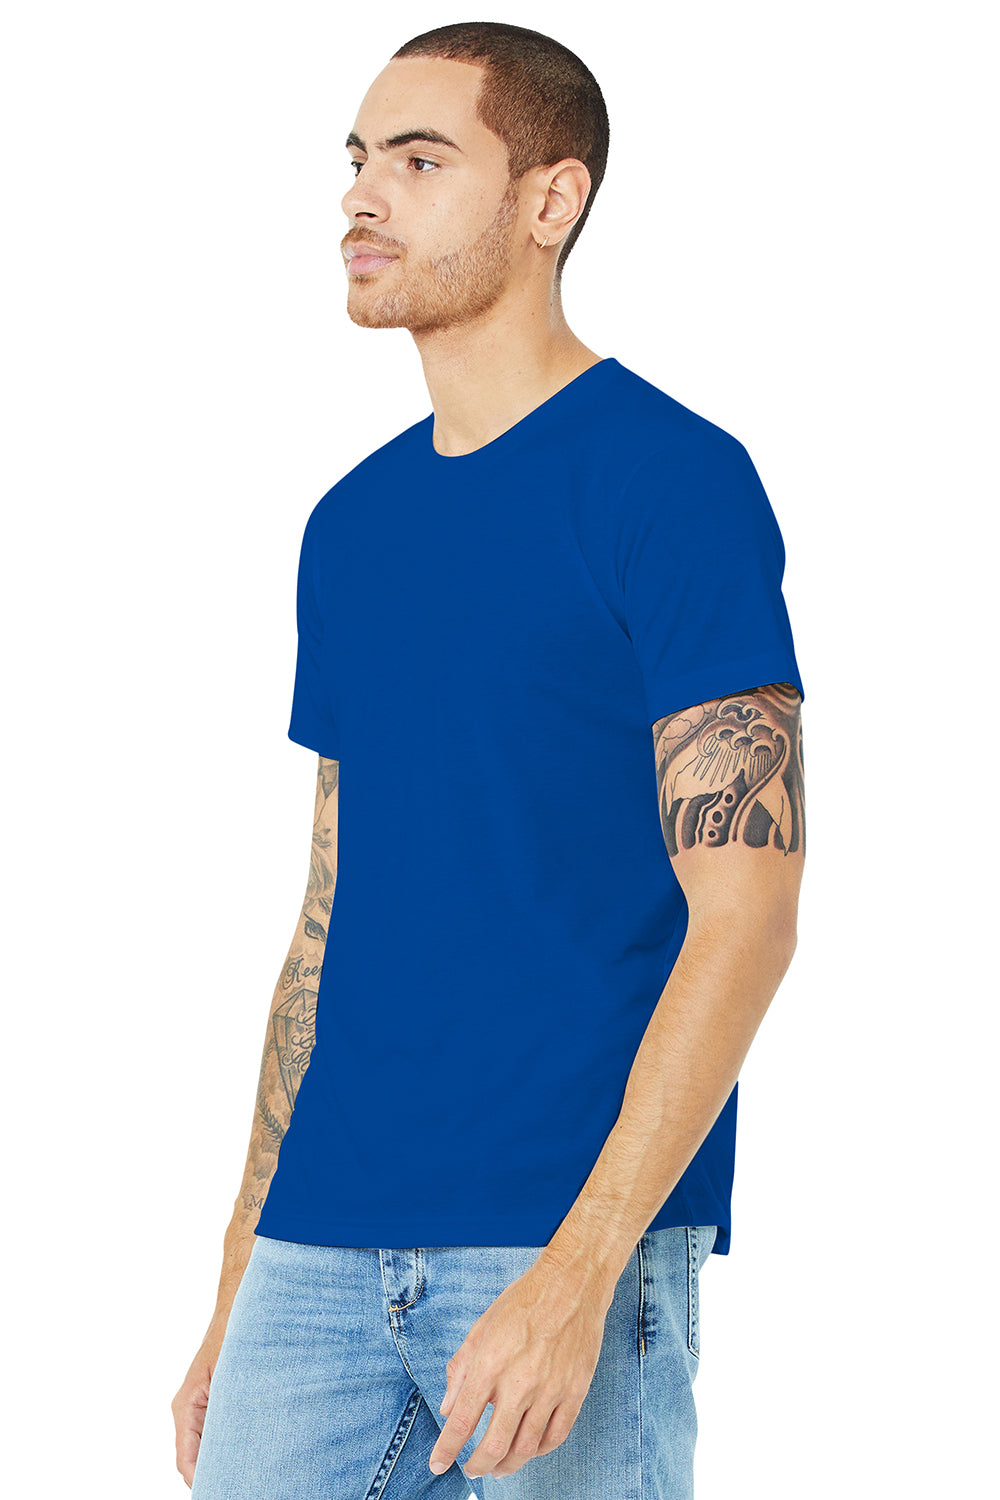 Bella + Canvas 3001U/3001USA Mens USA Made Jersey Short Sleeve Crewneck T-Shirt Royal Blue Model 3Q